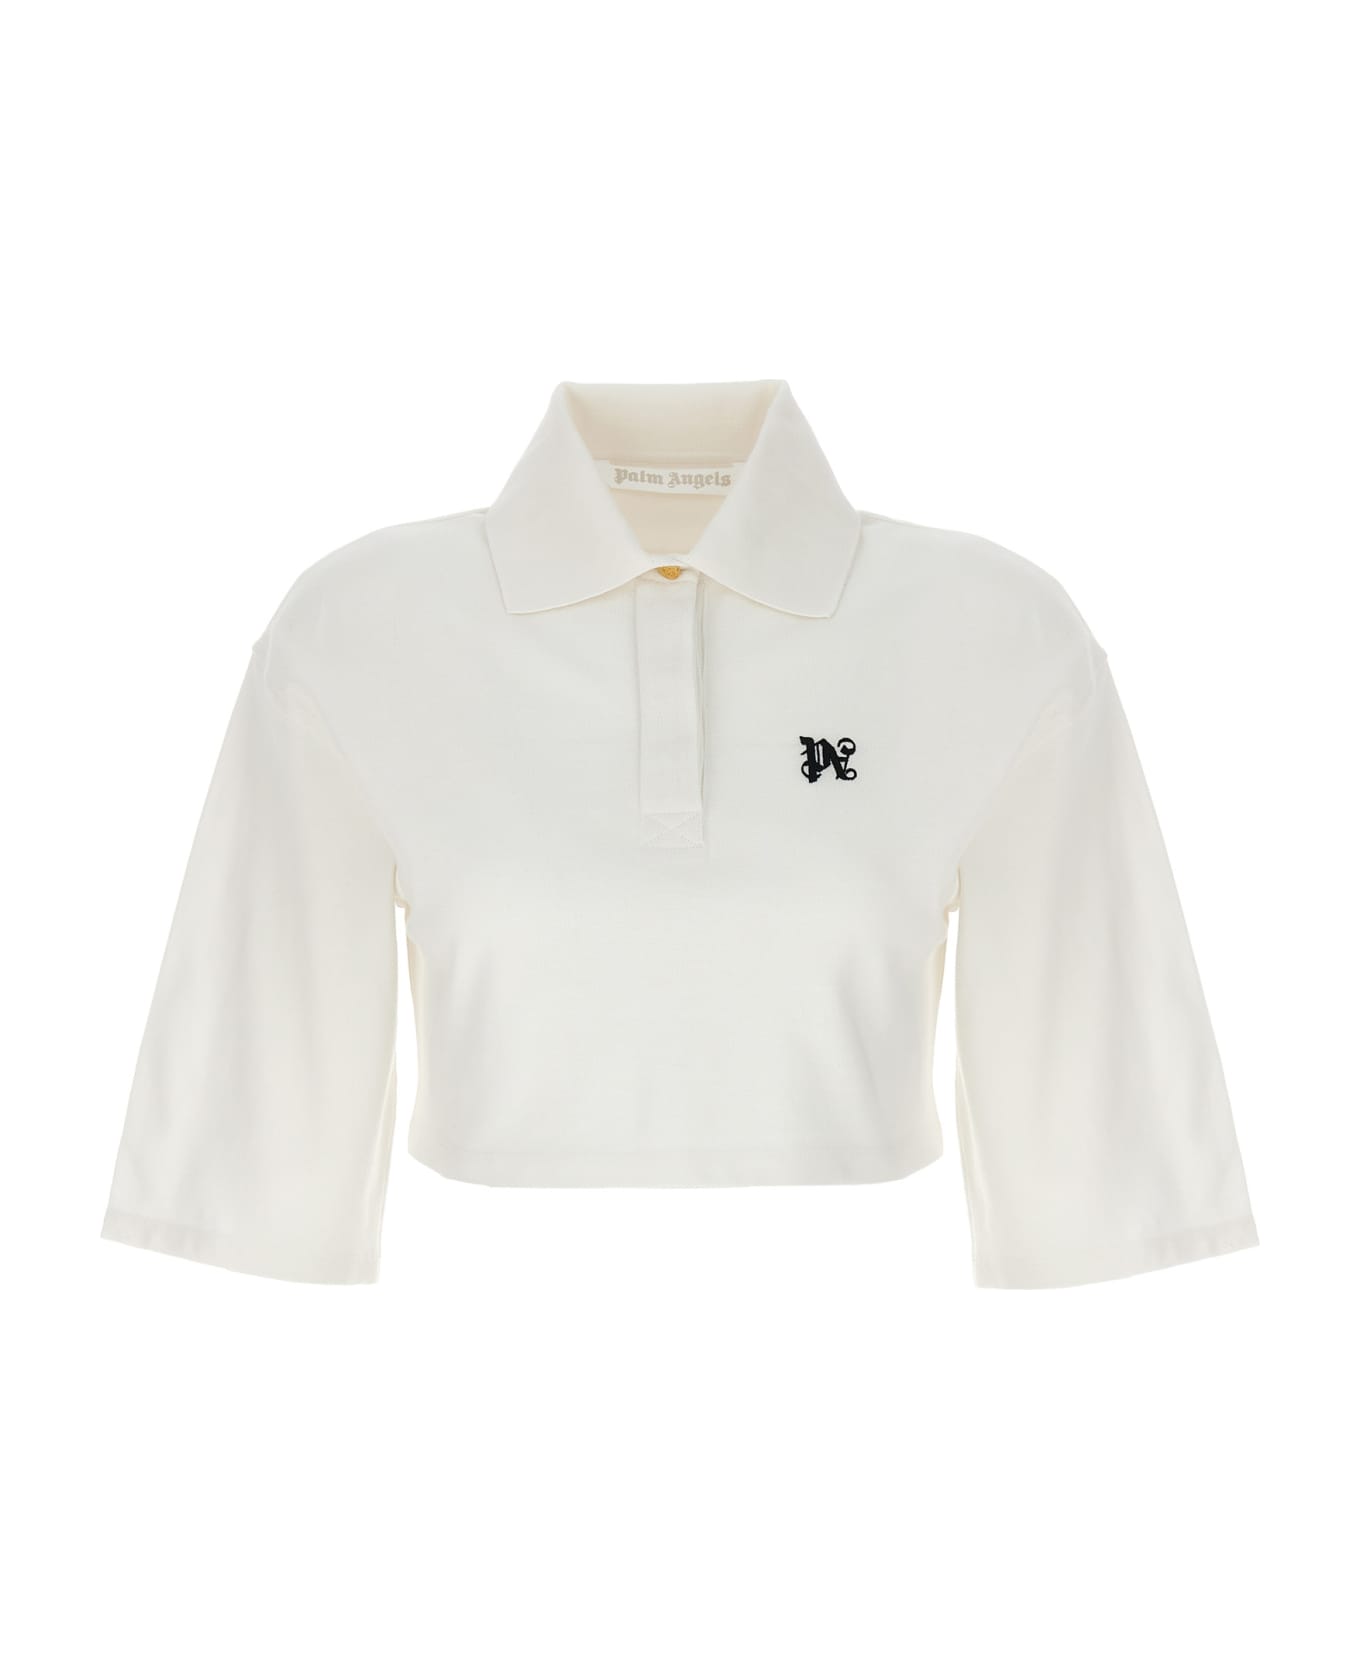 Palm Angels 'monogram' Crop Polo Shirt - White/Black ポロシャツ